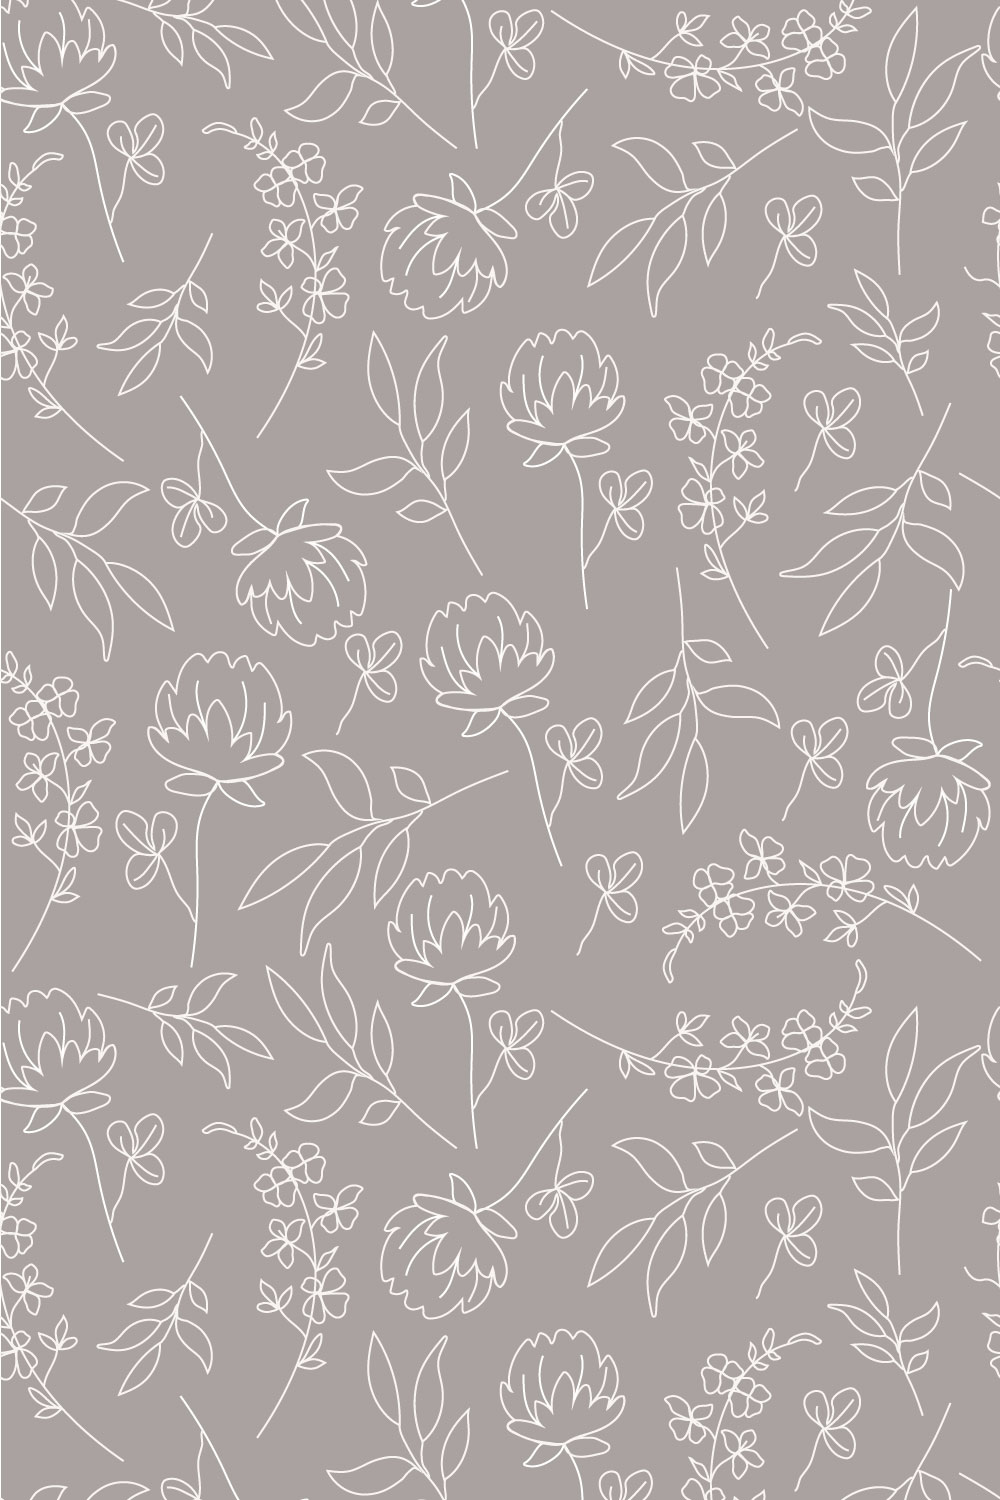 Gray Flower Line Art Seamless Pattern pinterest preview image.